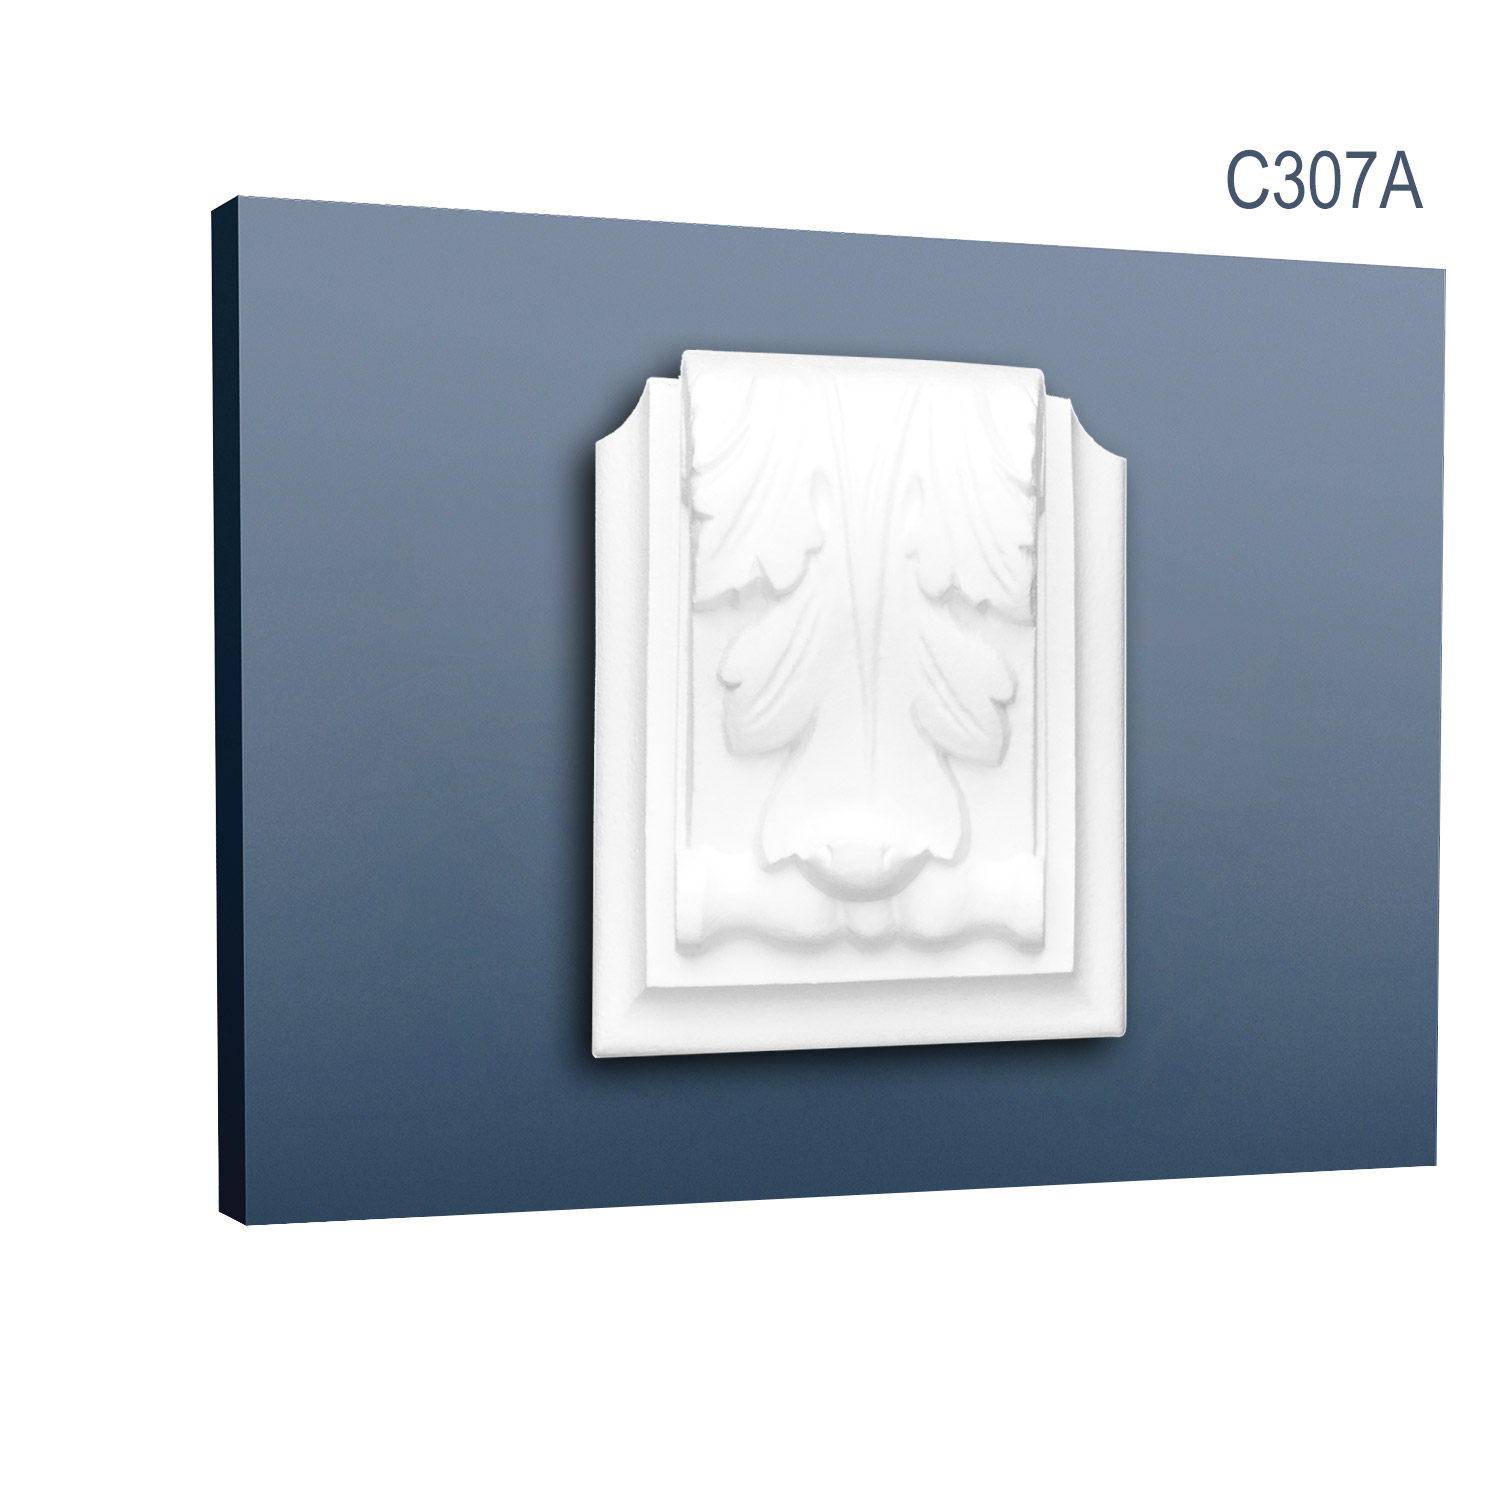 Cornisa Luxxus C307A, Dimensiuni: 7.5 X 9.4 X 4 cm, Orac Decor